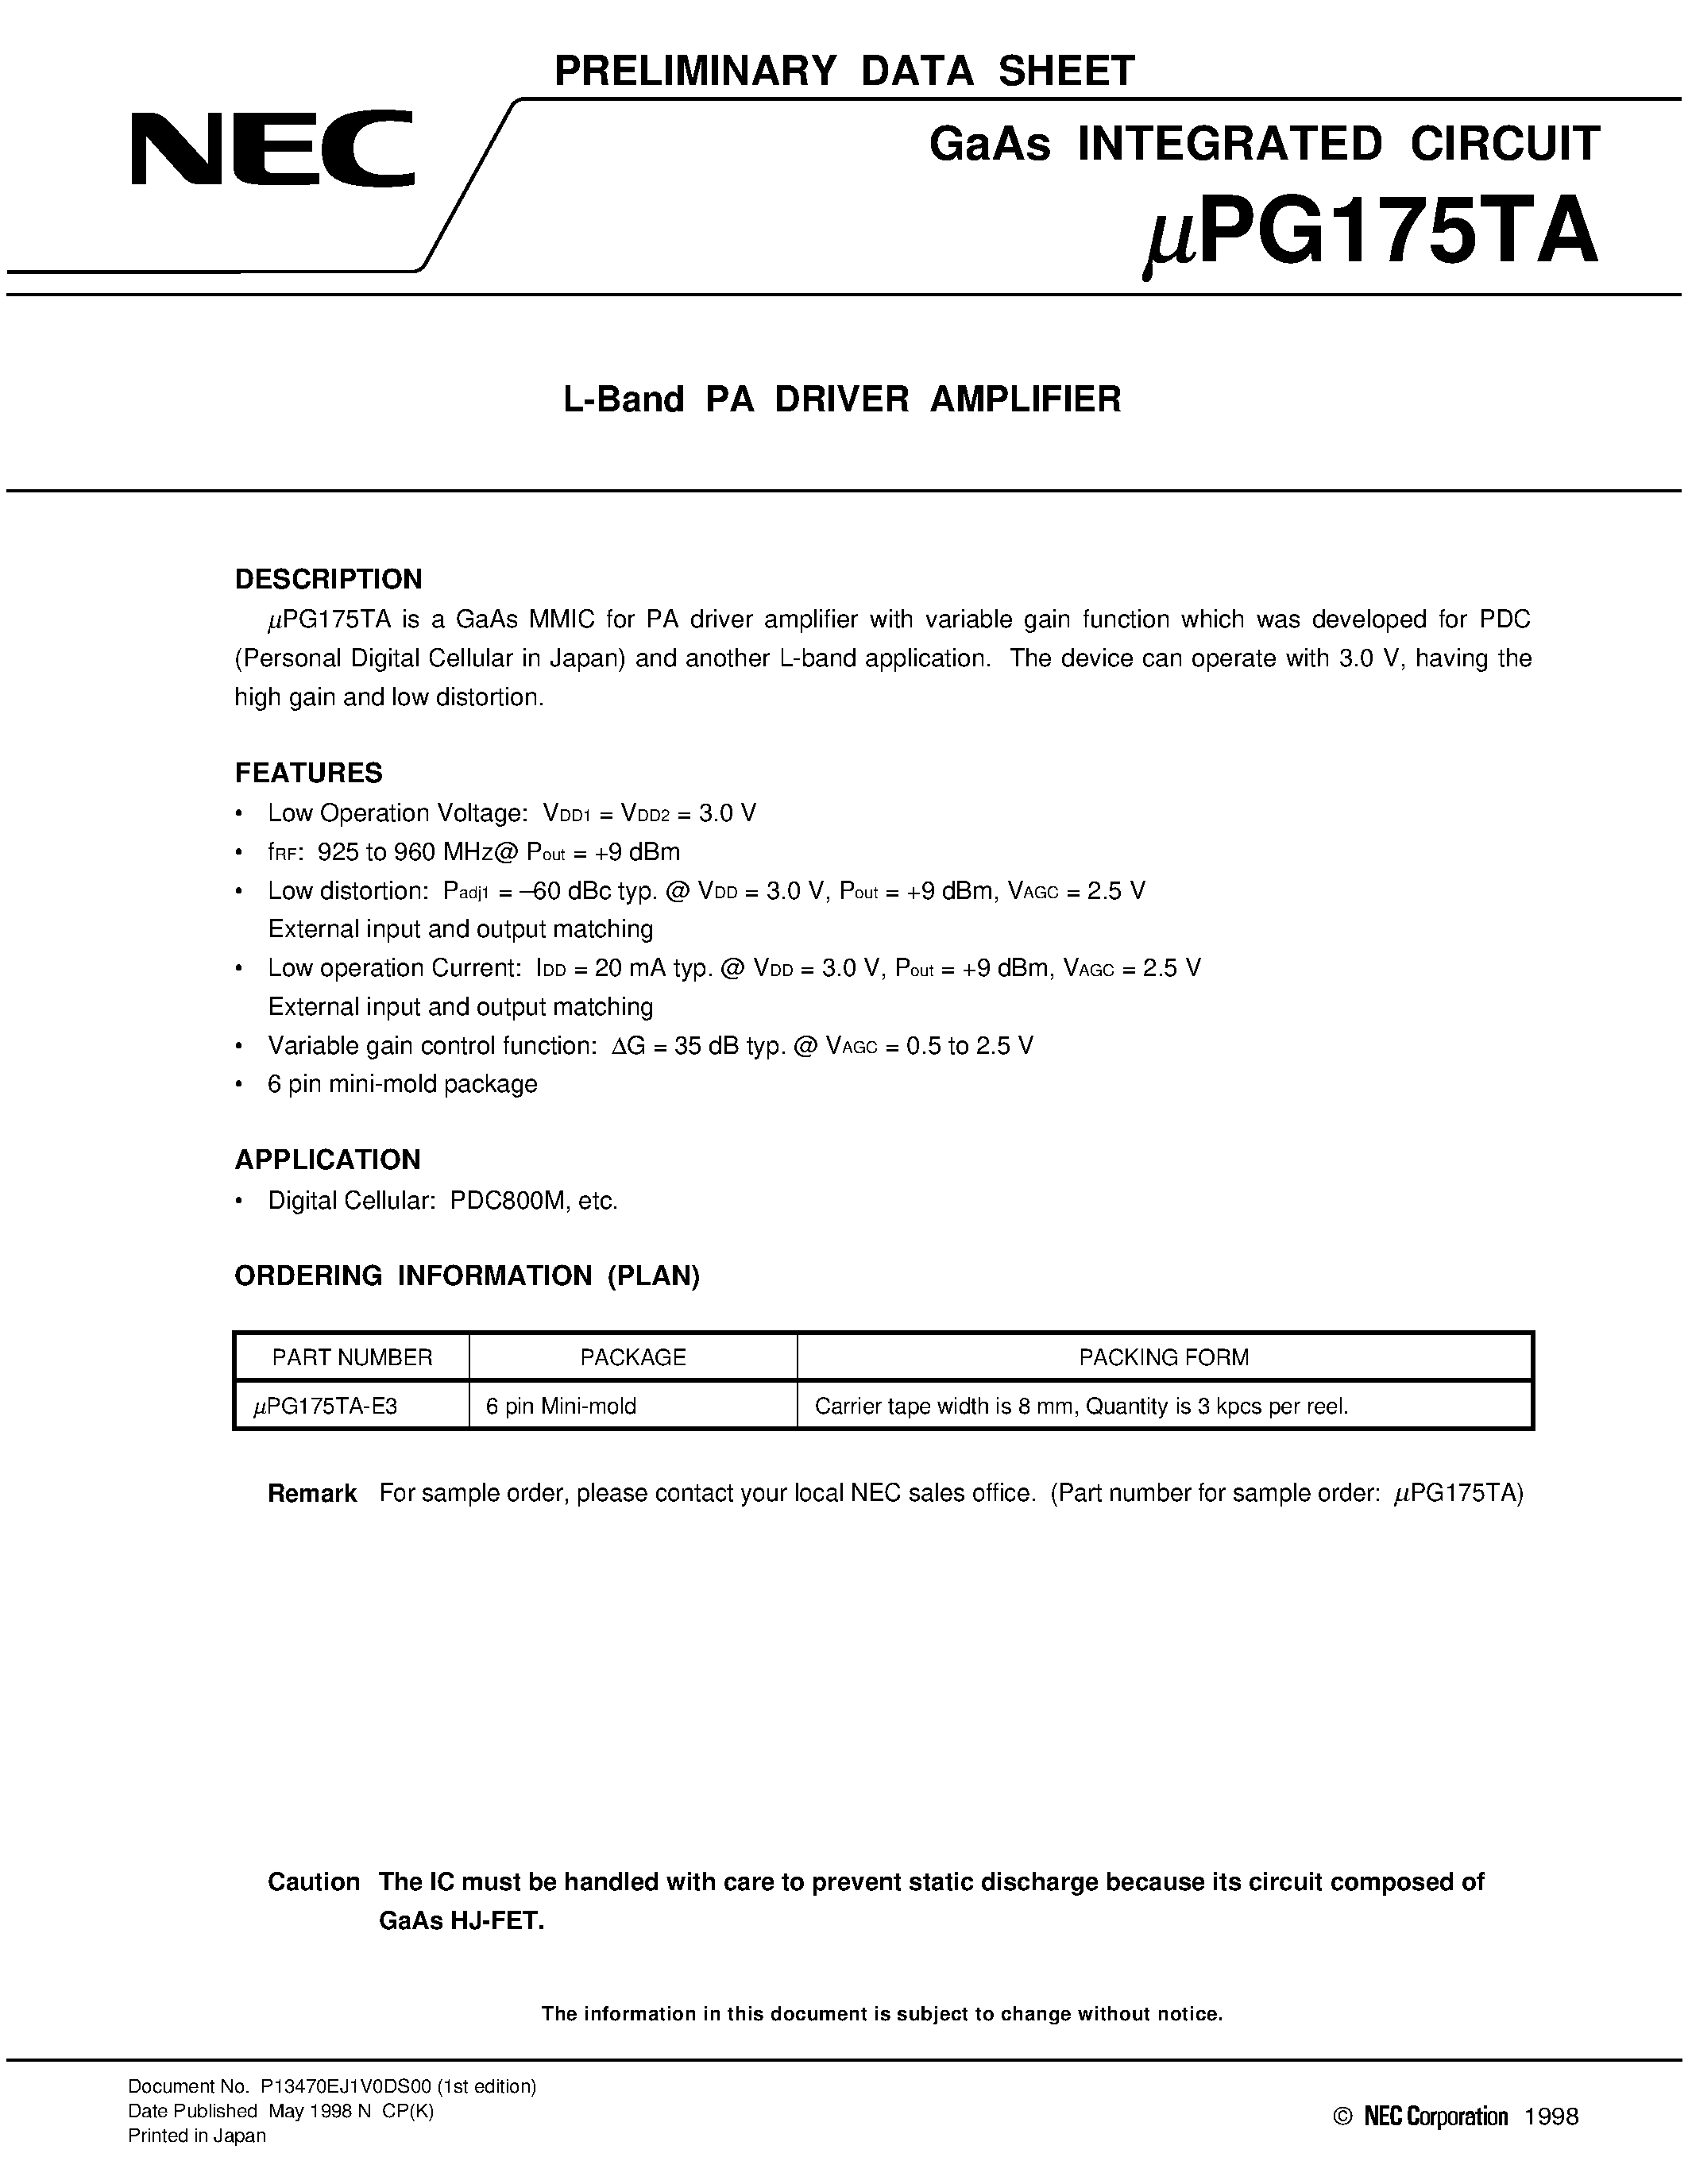 Datasheet UPG175TA - L-Band PA DRIVER AMPLIFIER page 1